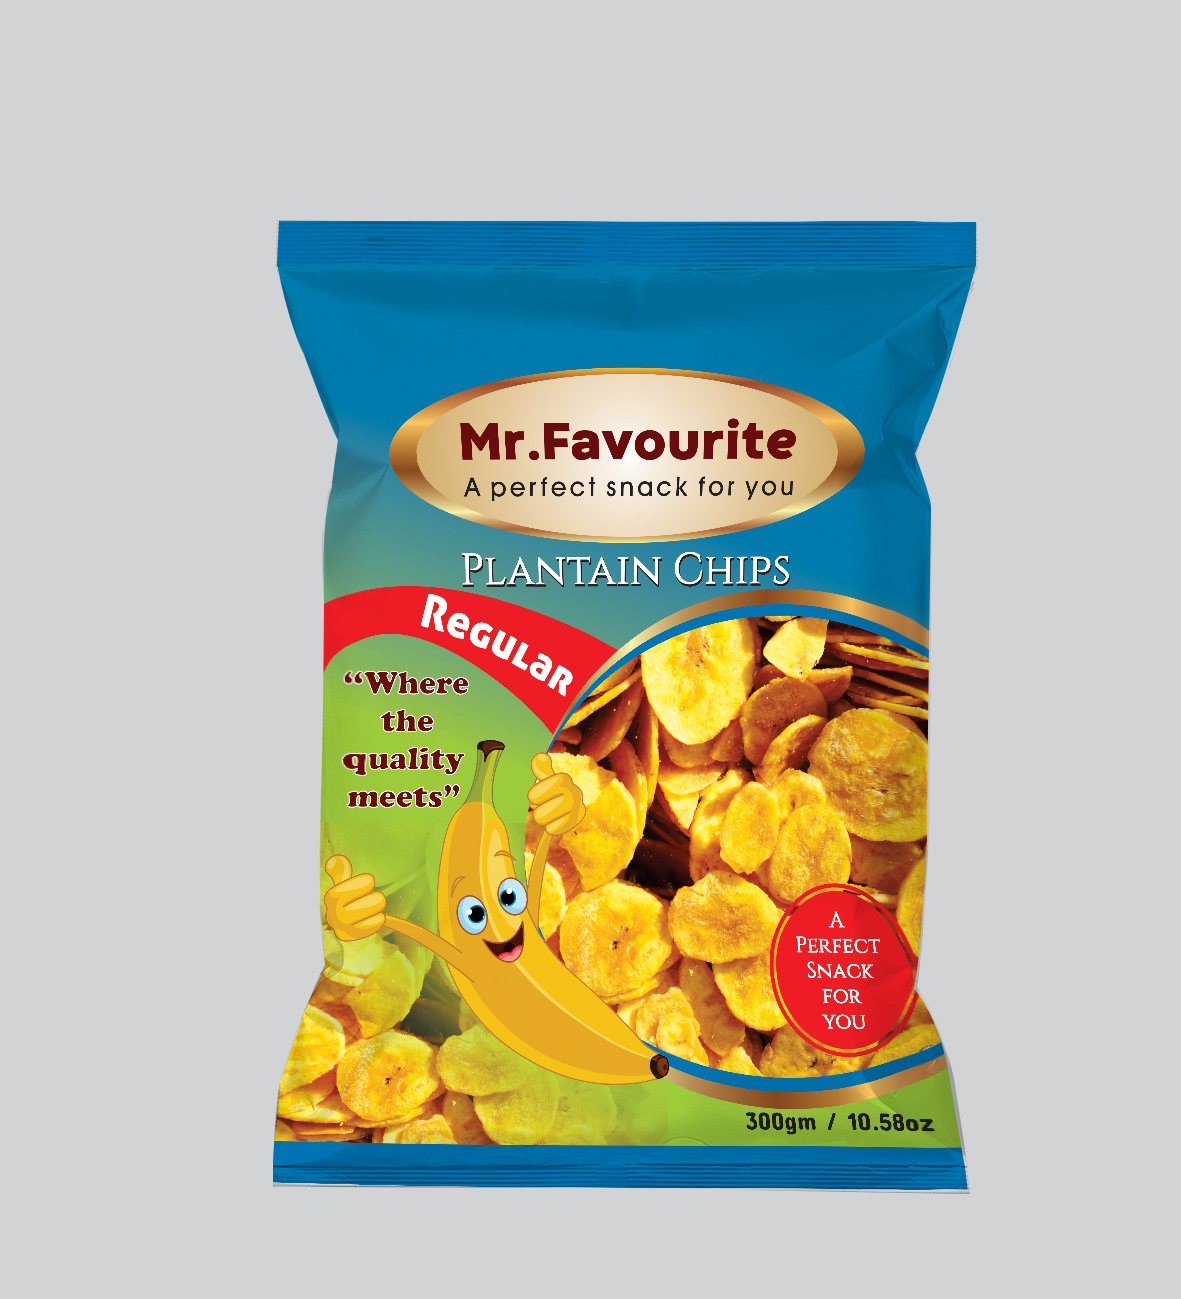 Mr. Favourite Plantain Chips Contain No Added Sugar